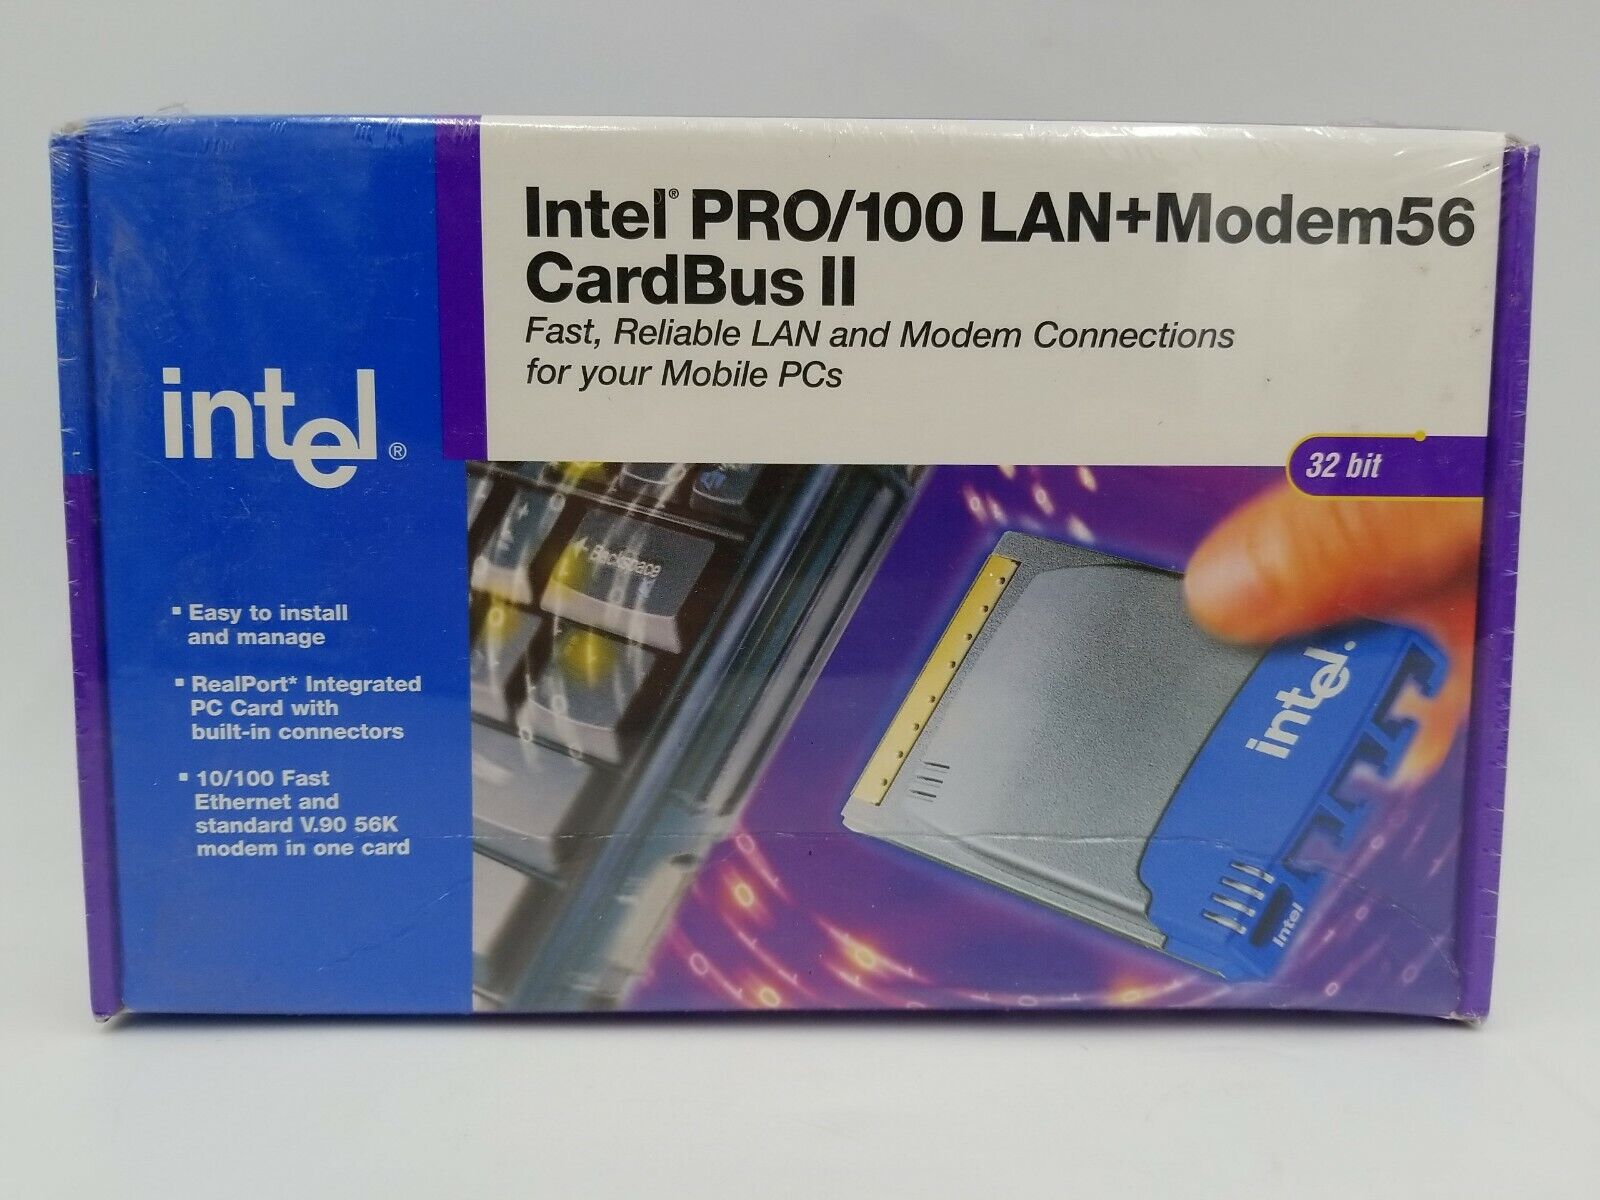 Intel PRO/100 LAN+Modem 56 CardBus II Ethernet PC Card with Integrated Jacks NEW